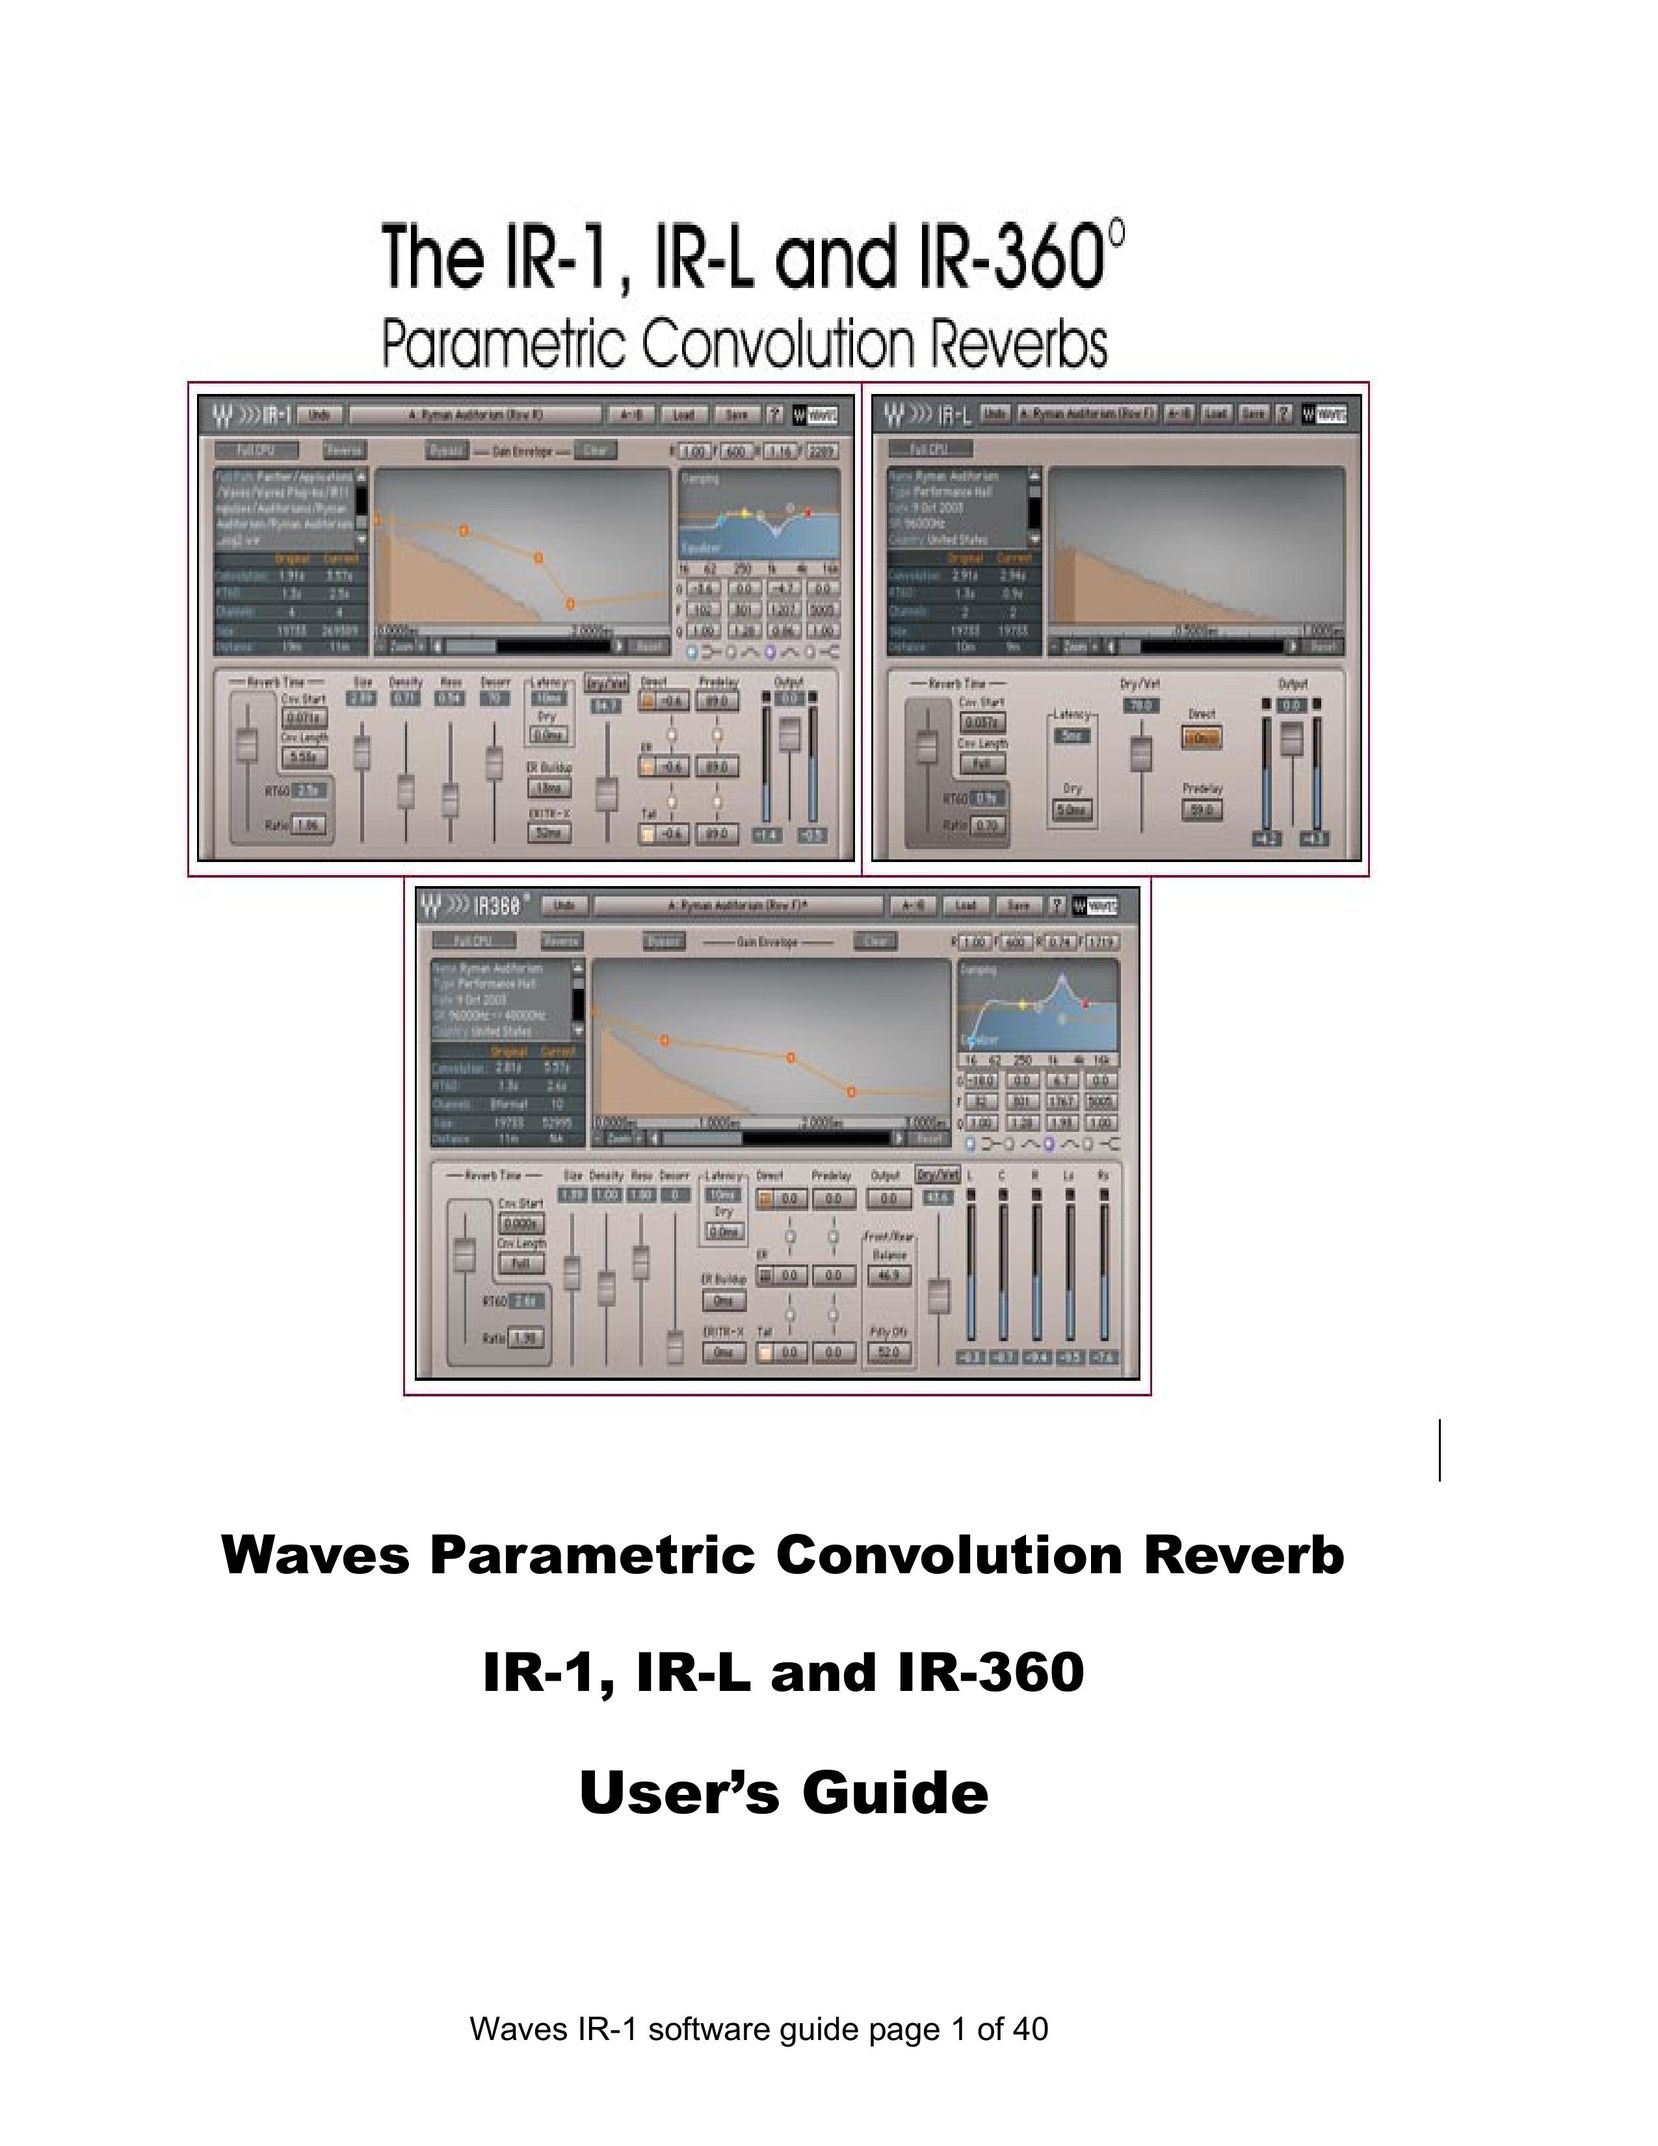 Waves IR-360 Network Card User Manual